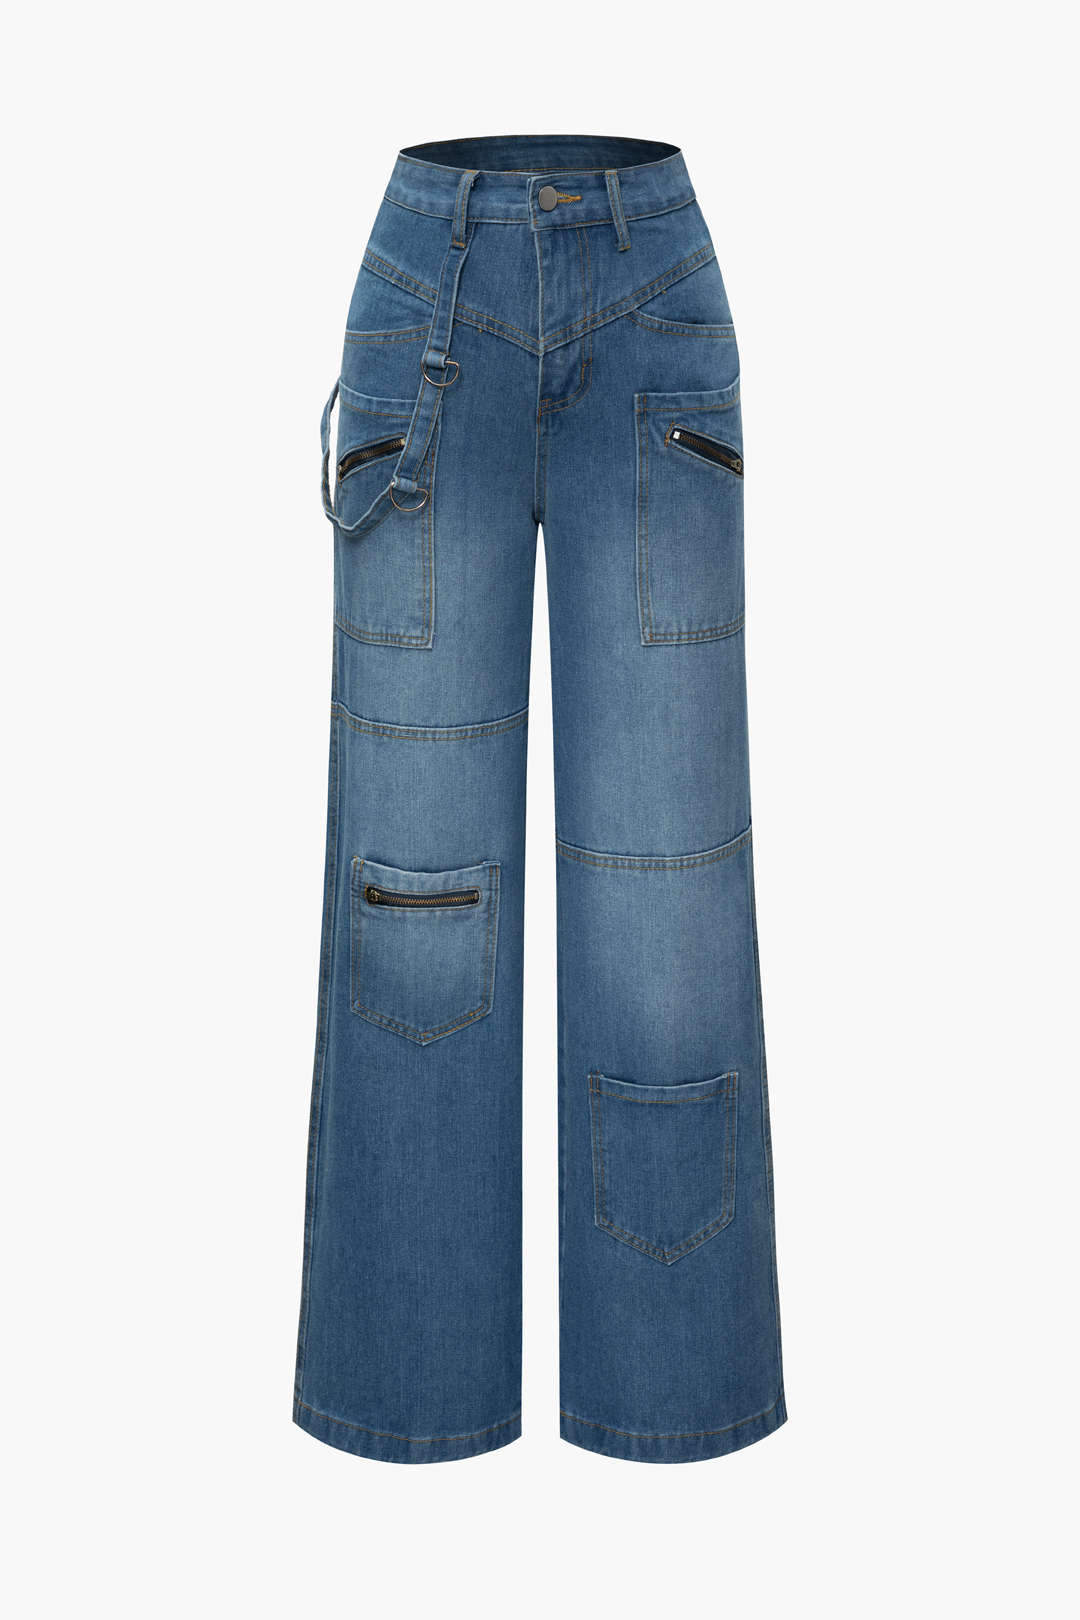 Low Rise Zipper Pocket Baggy Jeans